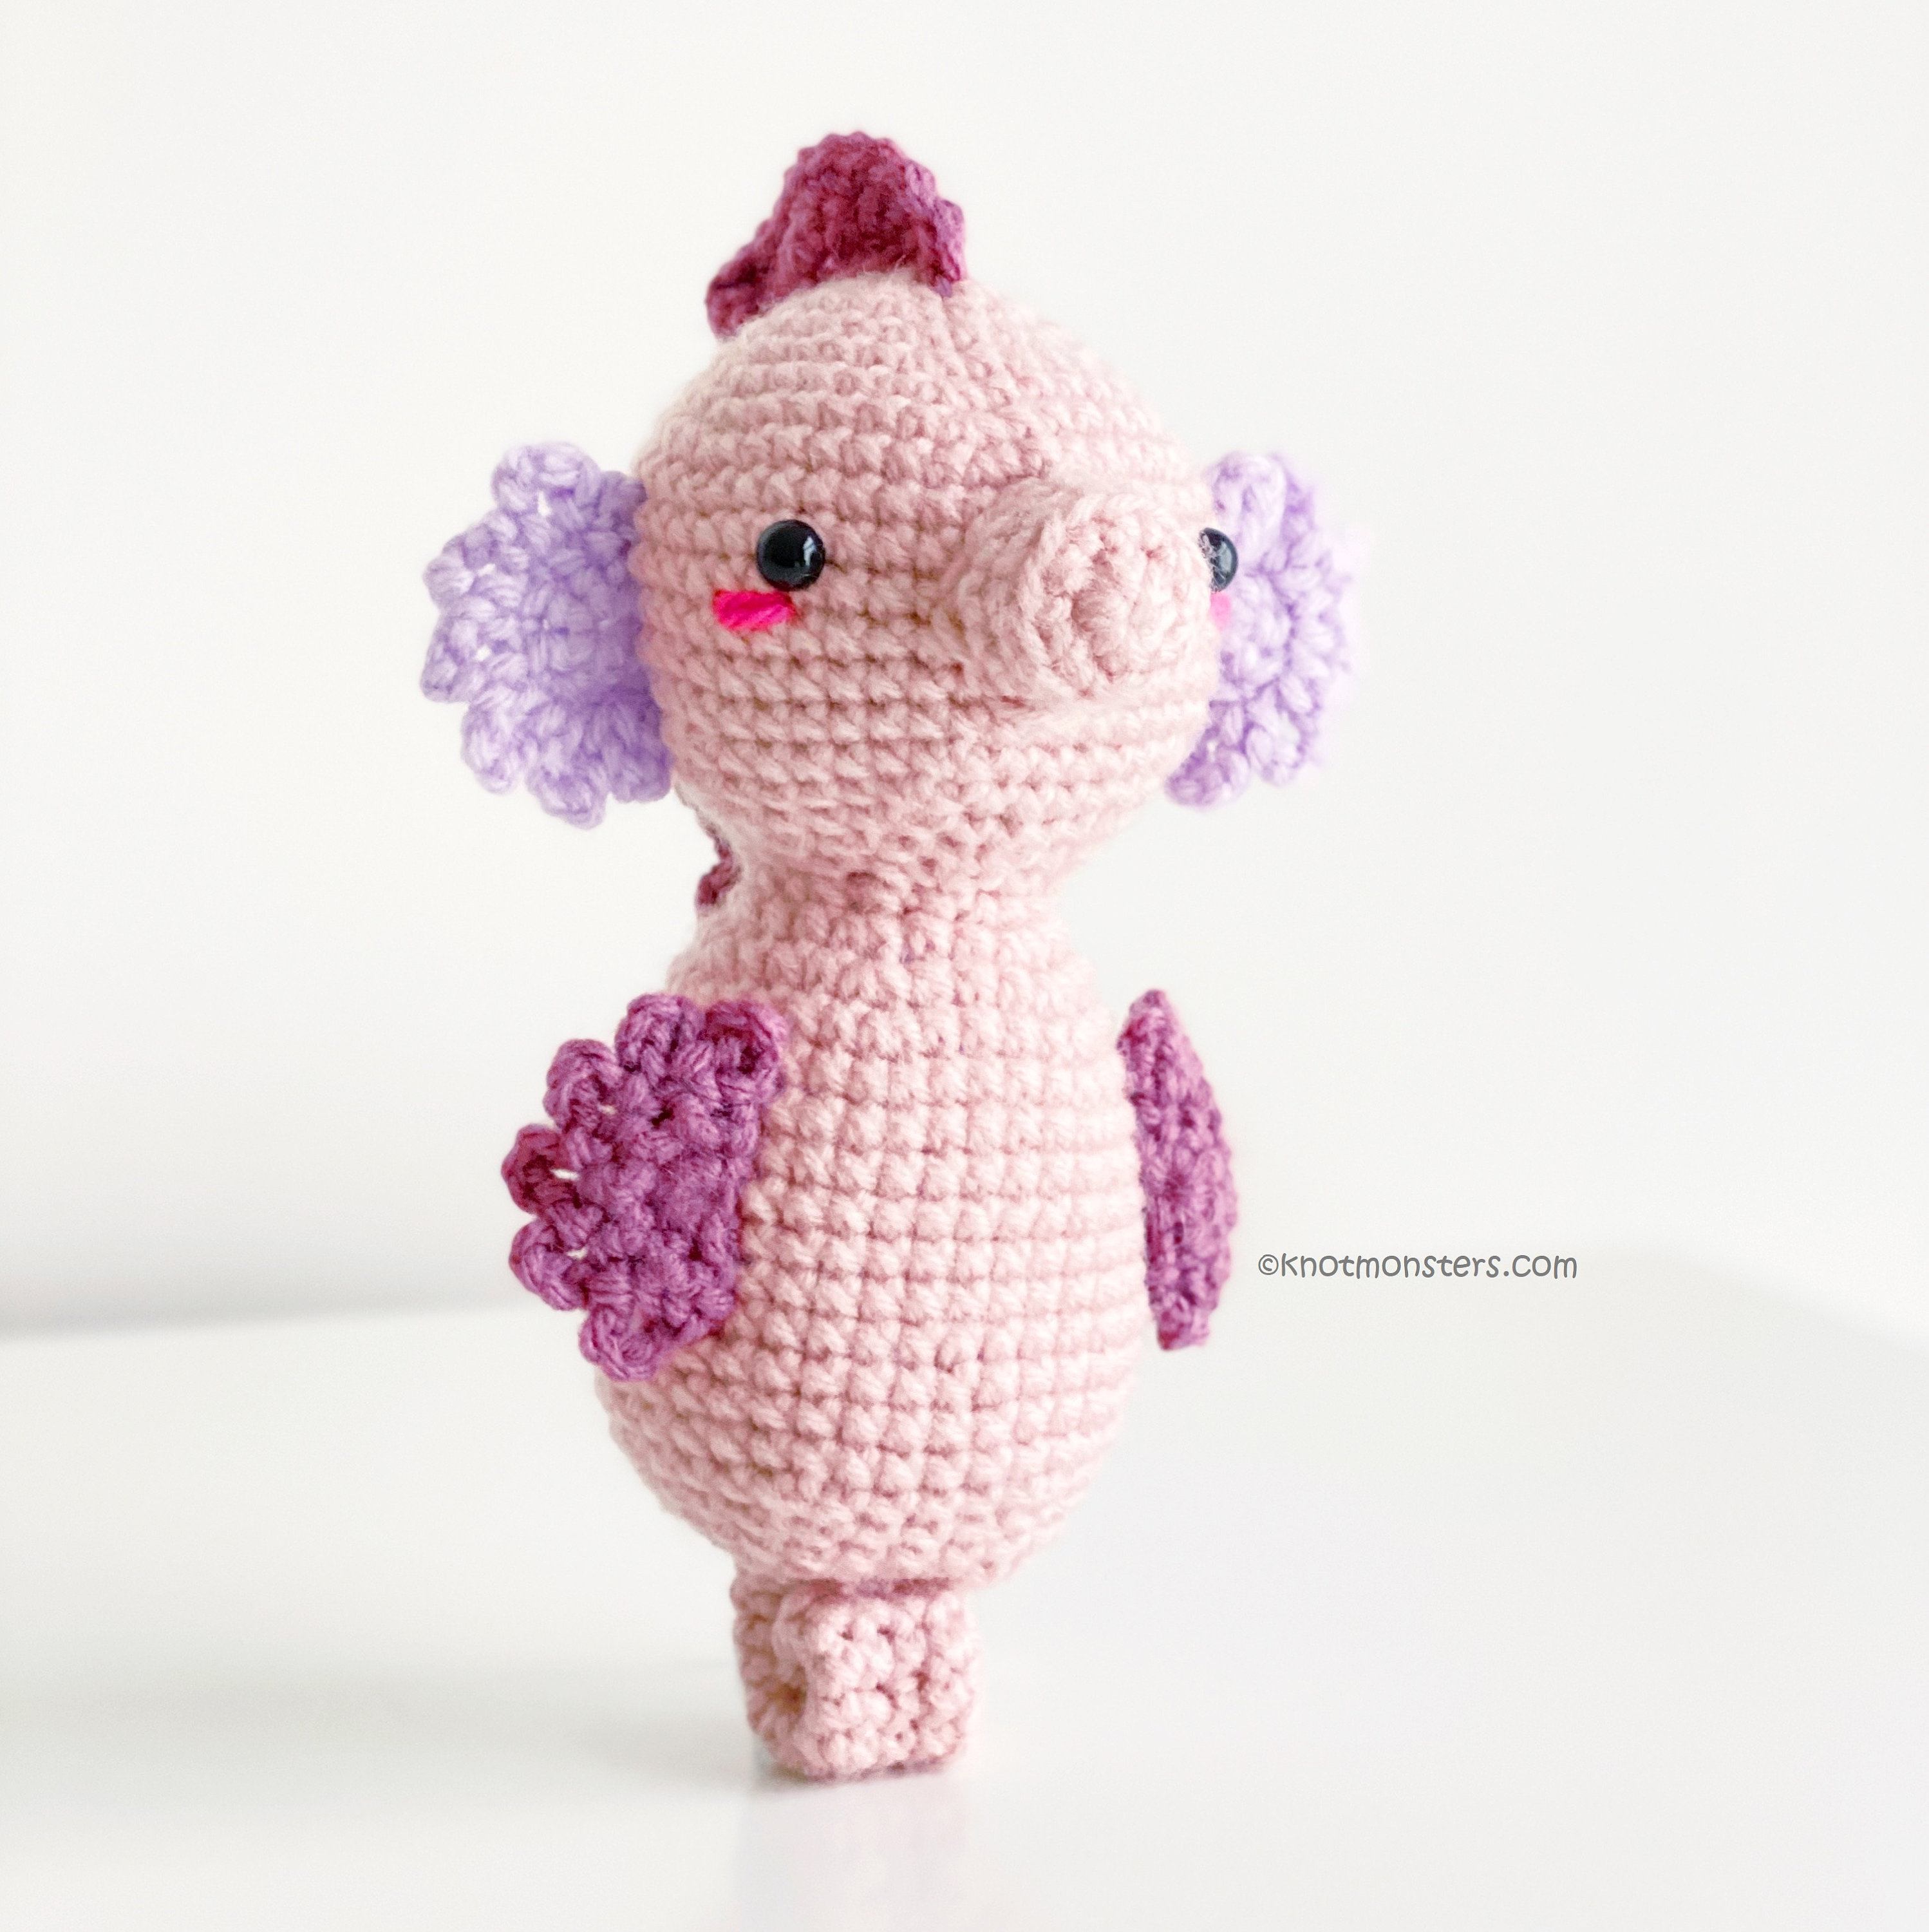 Amigurumi Seahorse Crochet Pattern - One Dog Woof